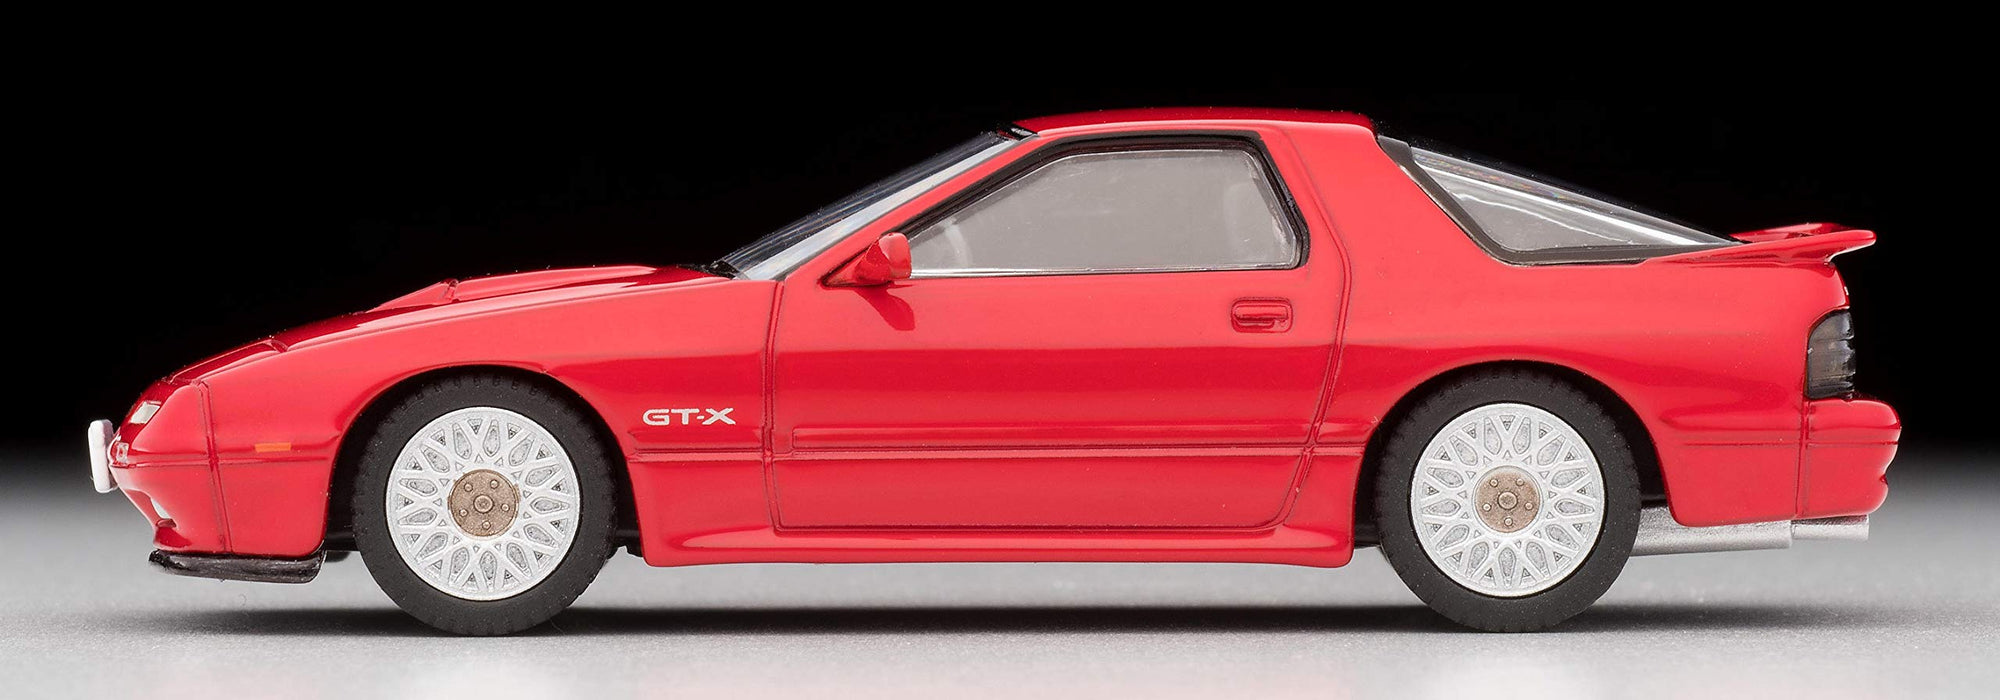 Tomytec Lv-N192d Tomica Limited Vintage Neo Mazda Savanna Rx-7 Gt-X Red 1/64 Scale Car